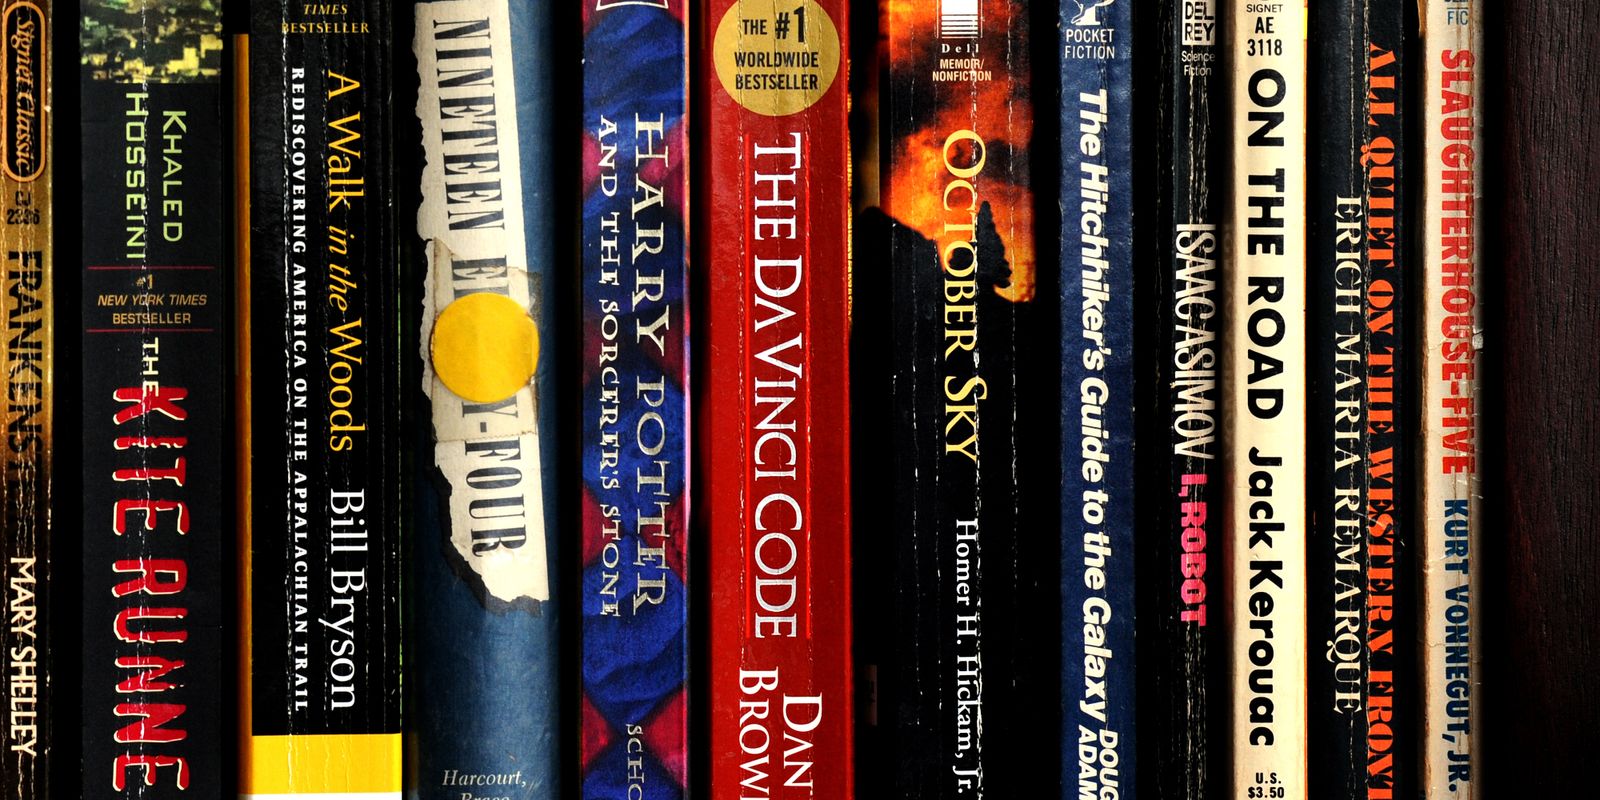 Image of books on a shelf.